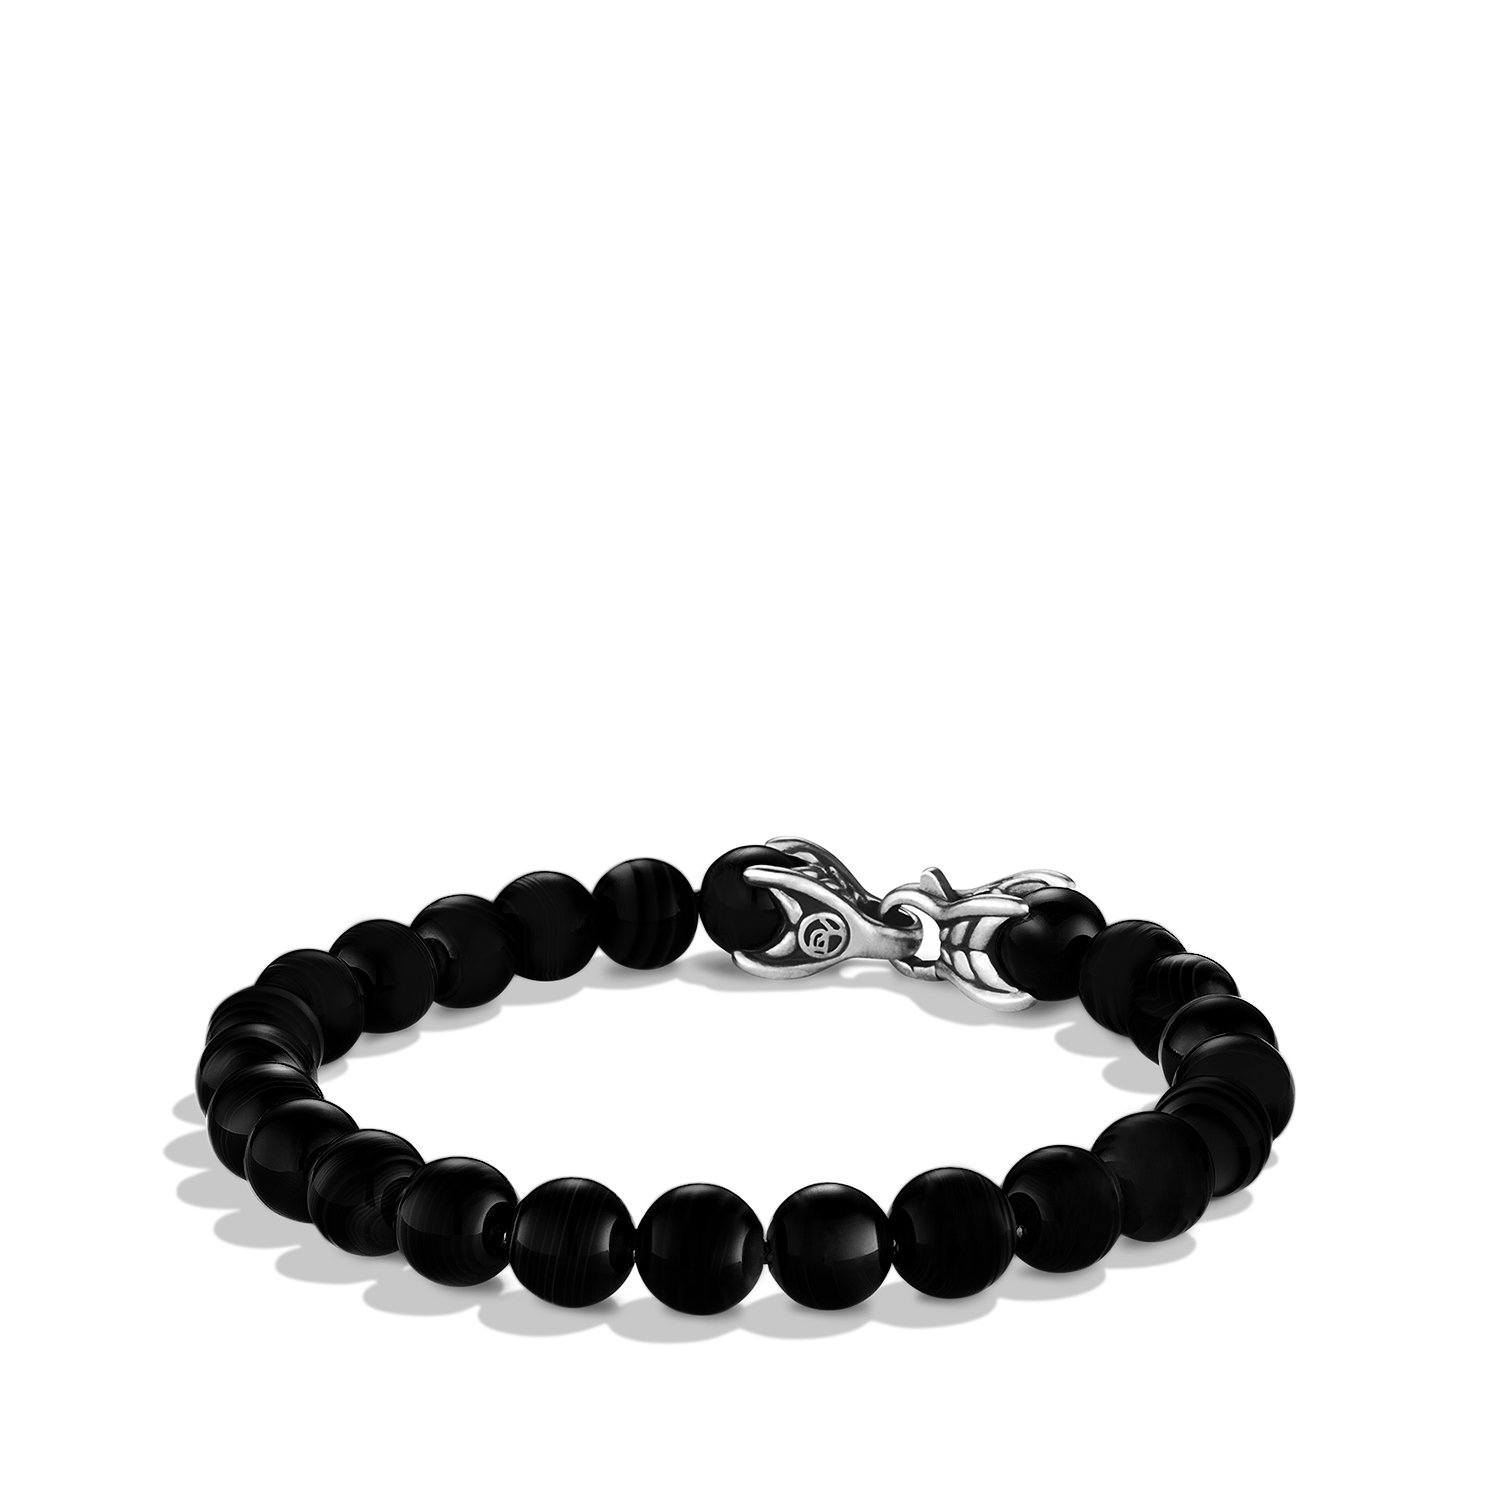 David Yurman 8mm Spiritual Beads Bracelet with Black Onyx, 8" 0